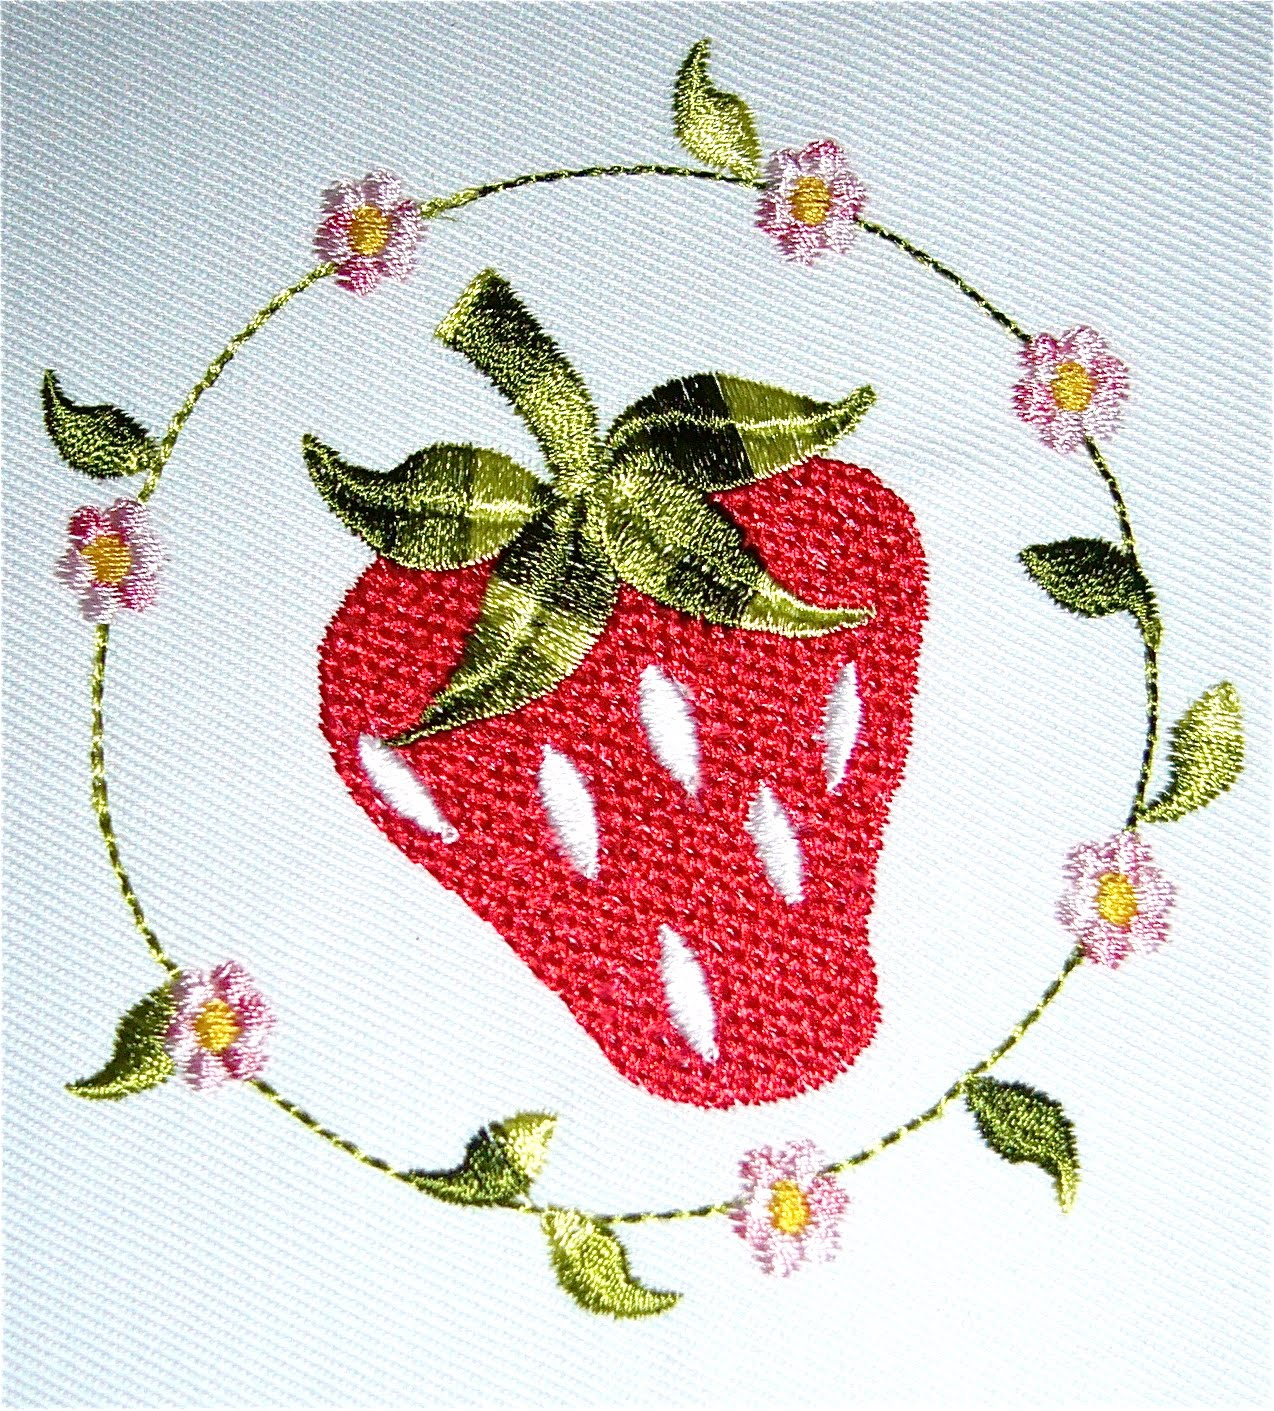 Strawberry Embroidery Pattern Madedi Free Machine Embroidery Design Strawberry